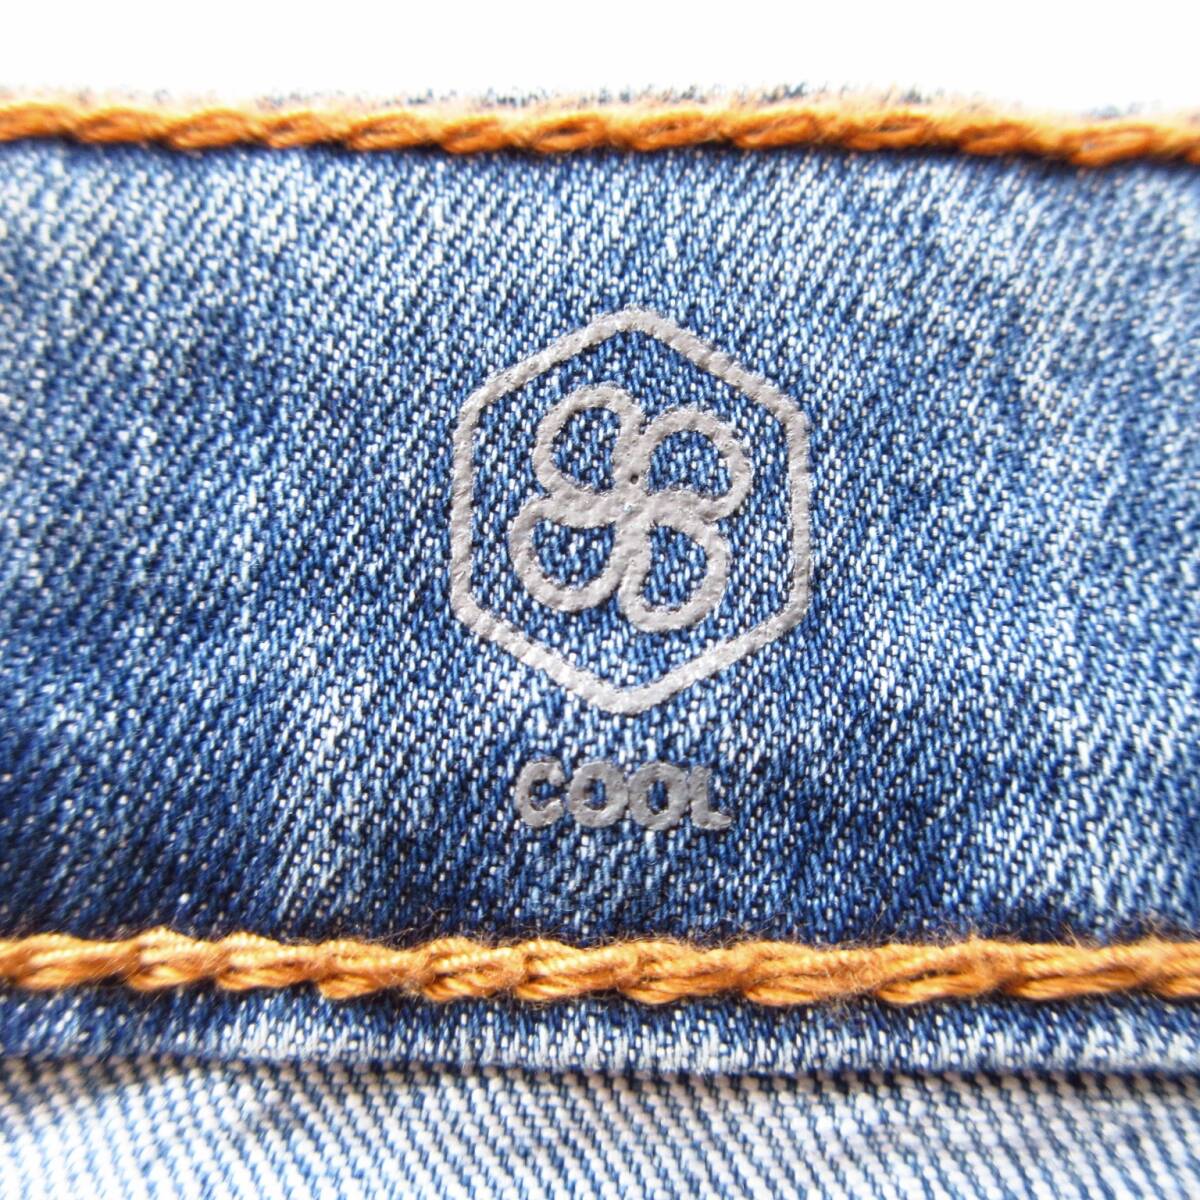  men's W34* unused Levi\'s Levi's 505 COOL stretch Denim pants jeans strut spring summer speed . light weight ... pants 00505-2477